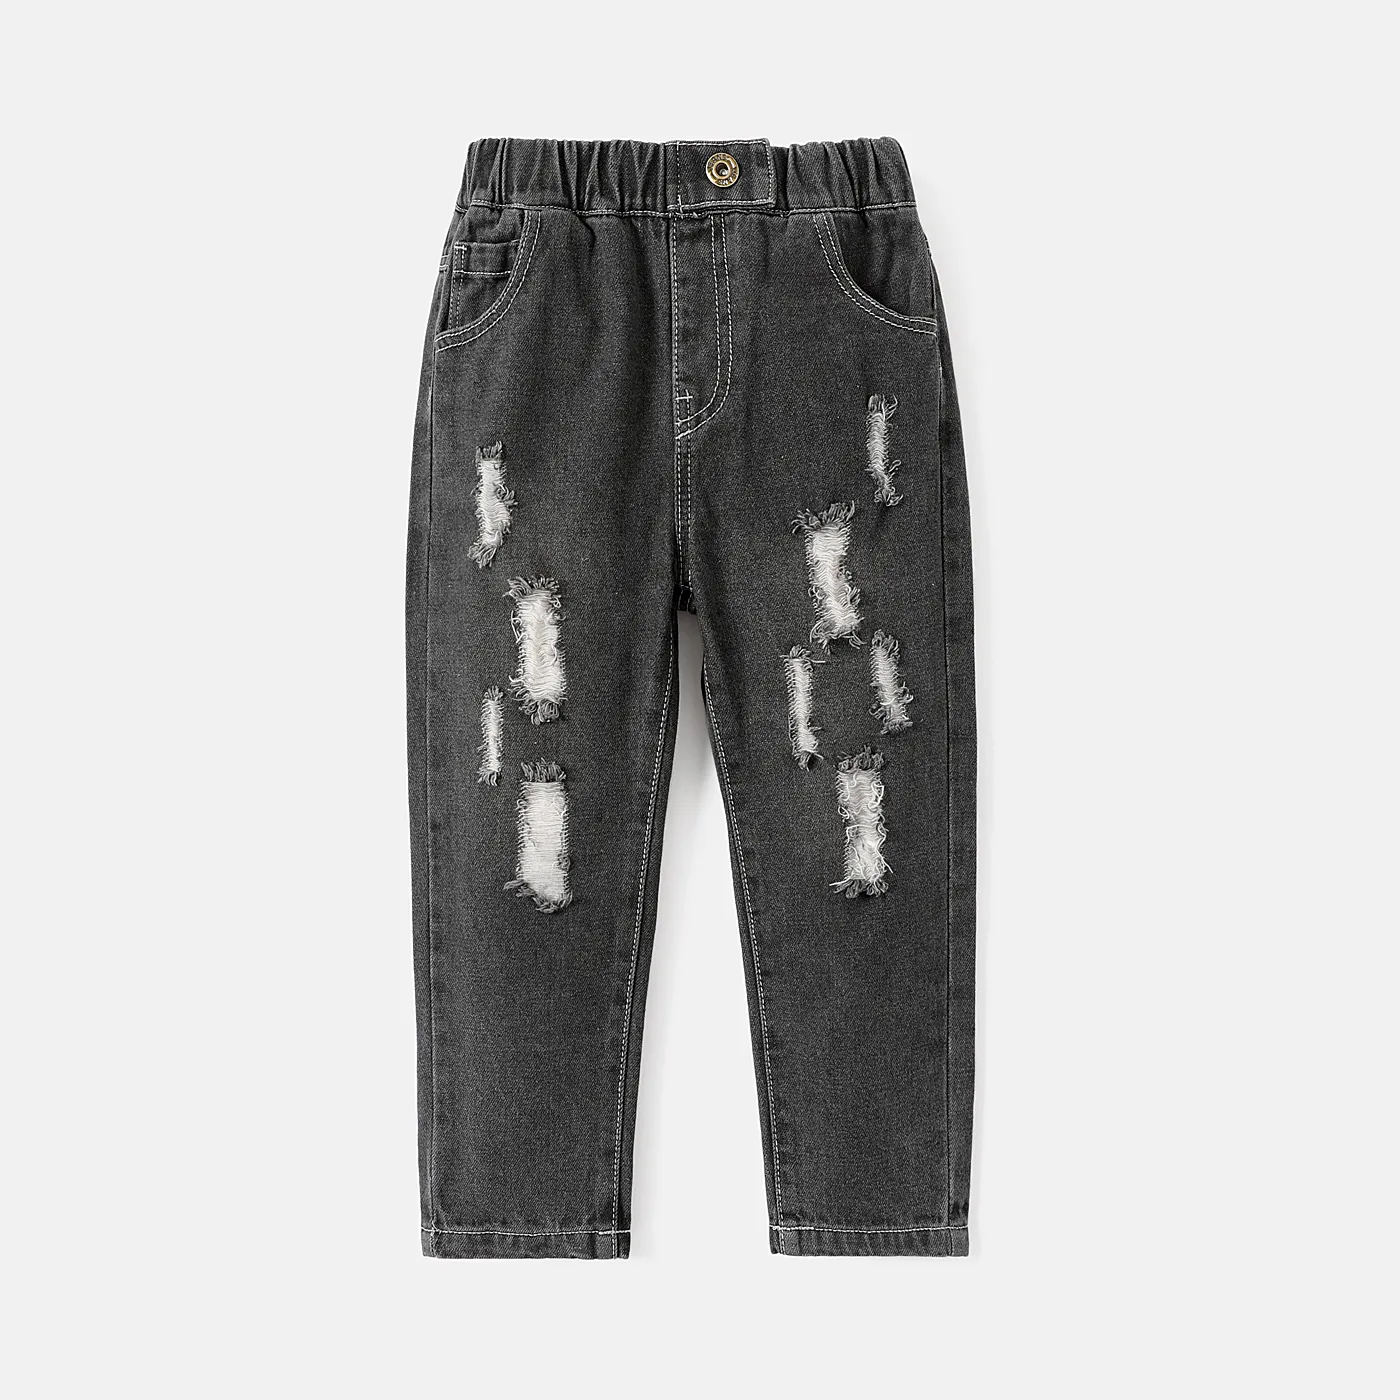 Toddler Girl/Boy Elasticized Cotton Ripped Denim Jeans